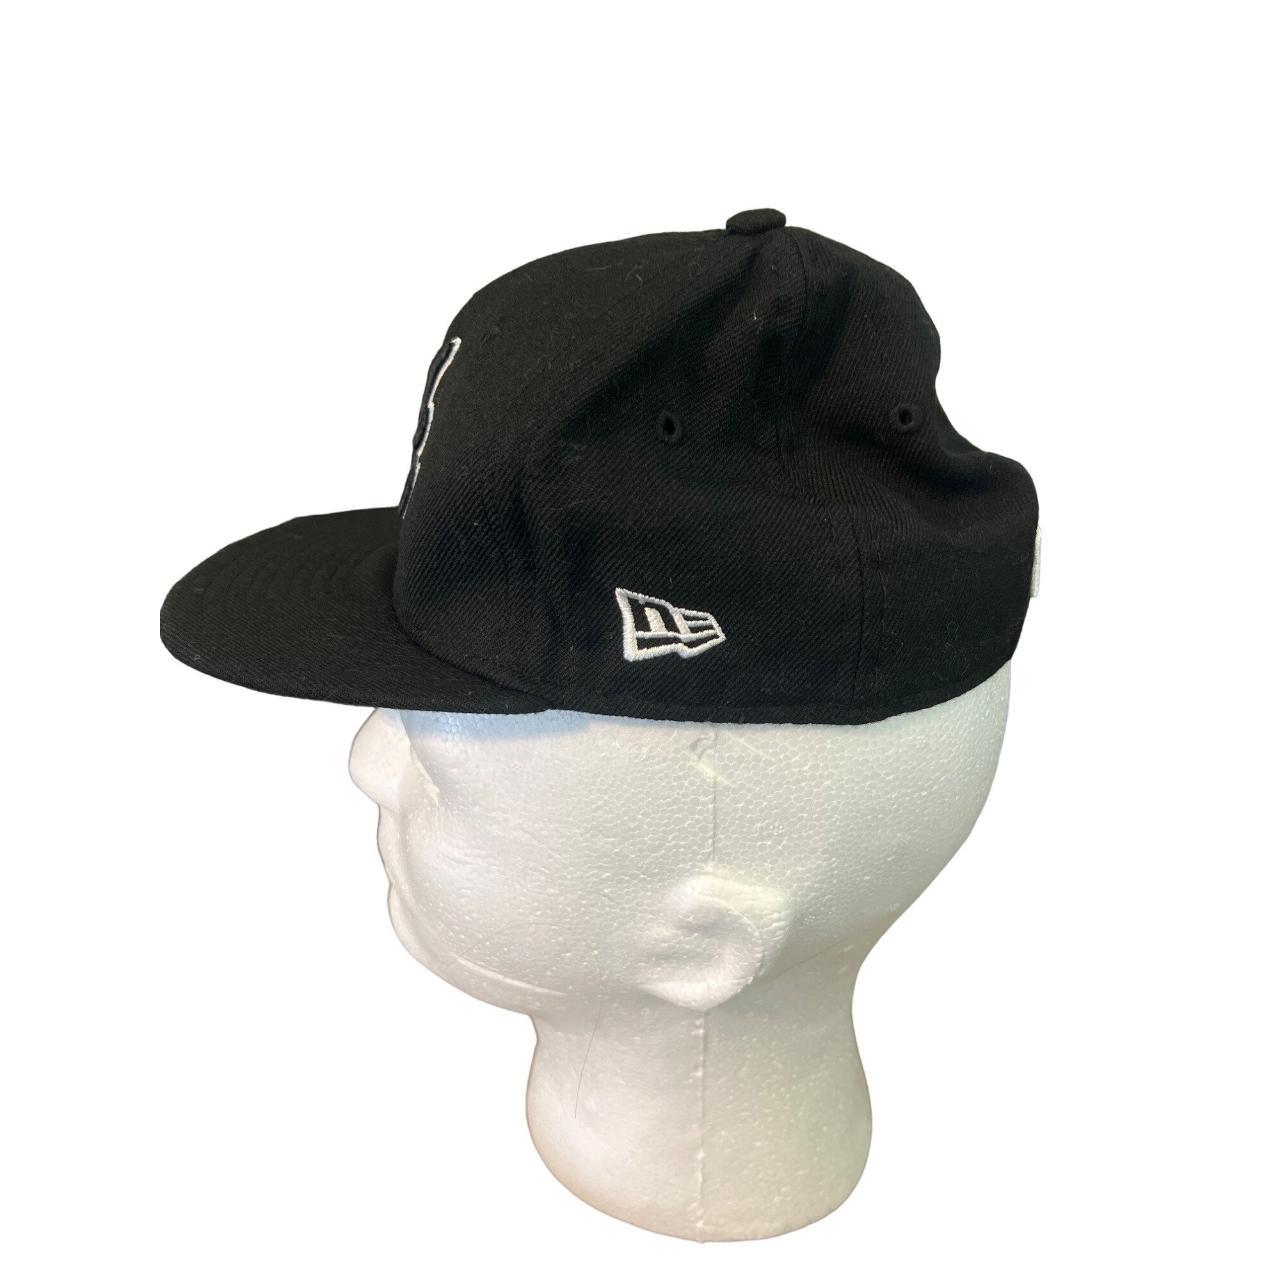 This Genuine Merchandise New Era Baseball Cap is in... - Depop